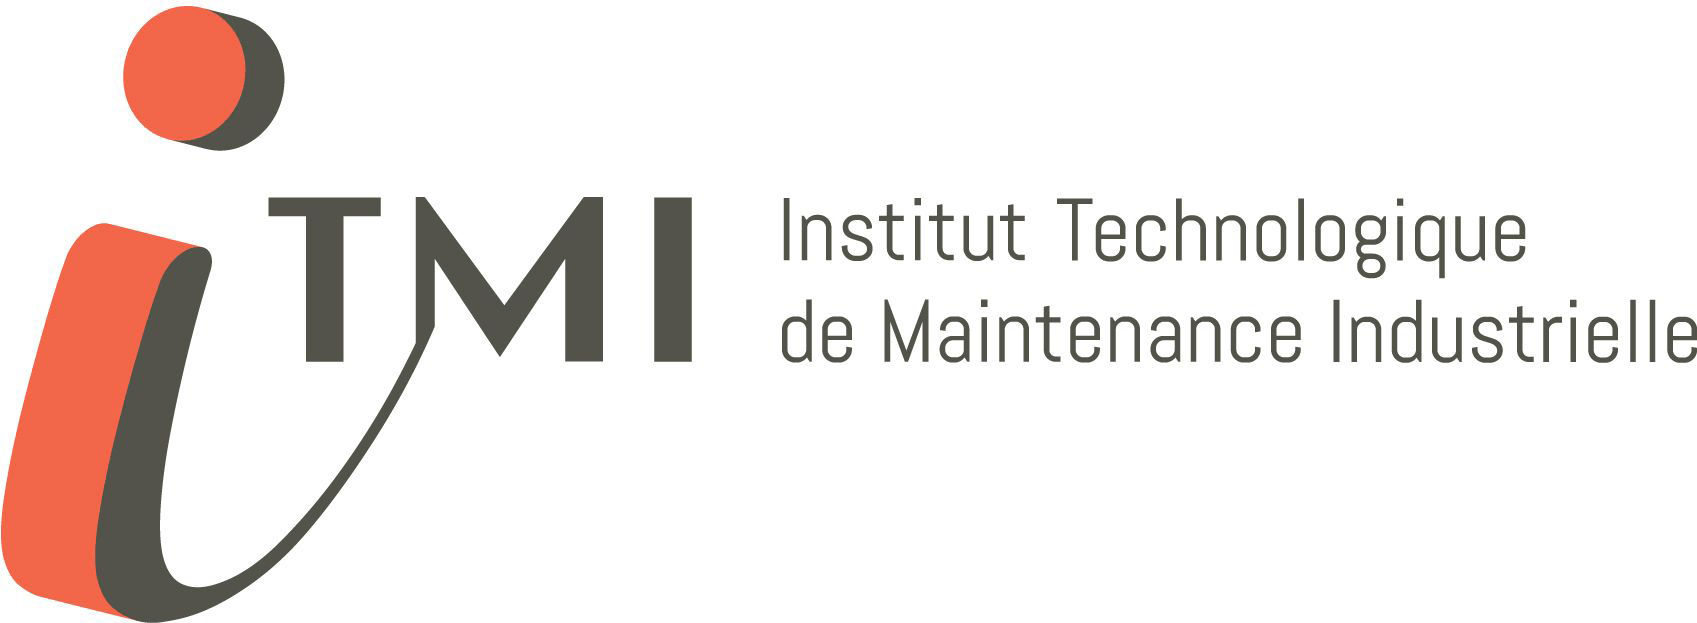 ITMI-technology-institut-of-industrial-maintenance